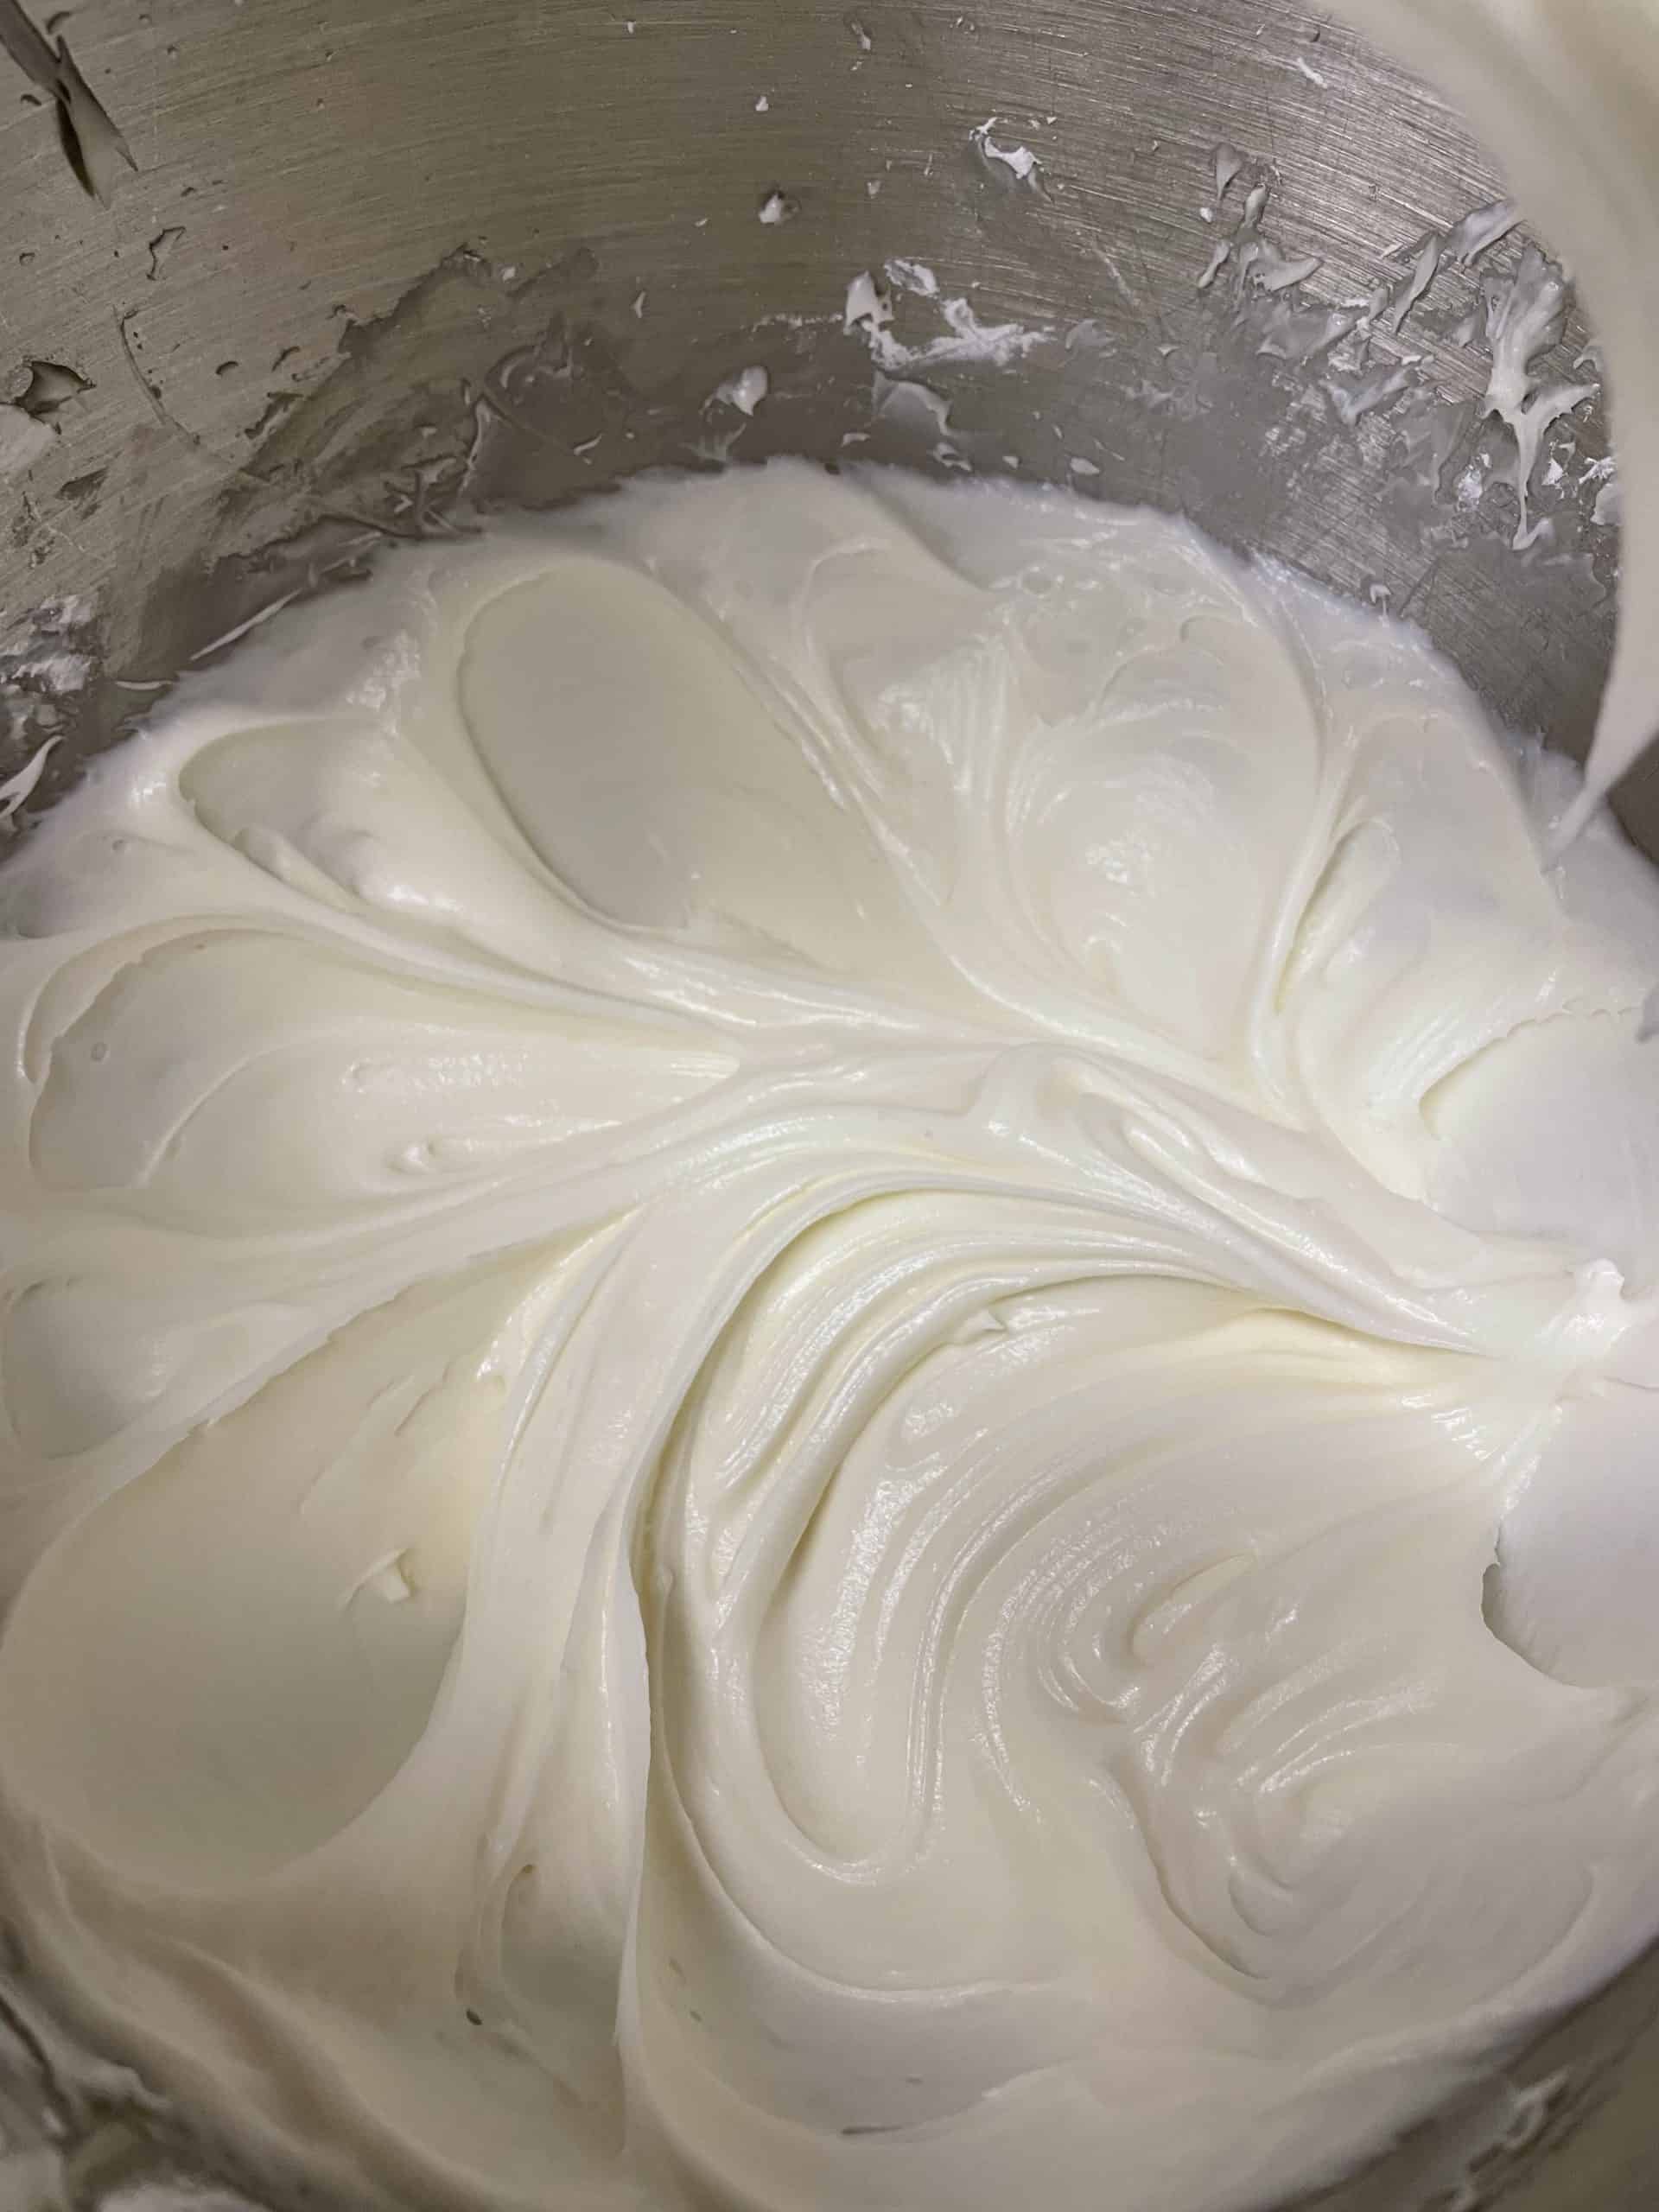 Cream Cheese, Powdered Sugar, and Vanilla Mixture